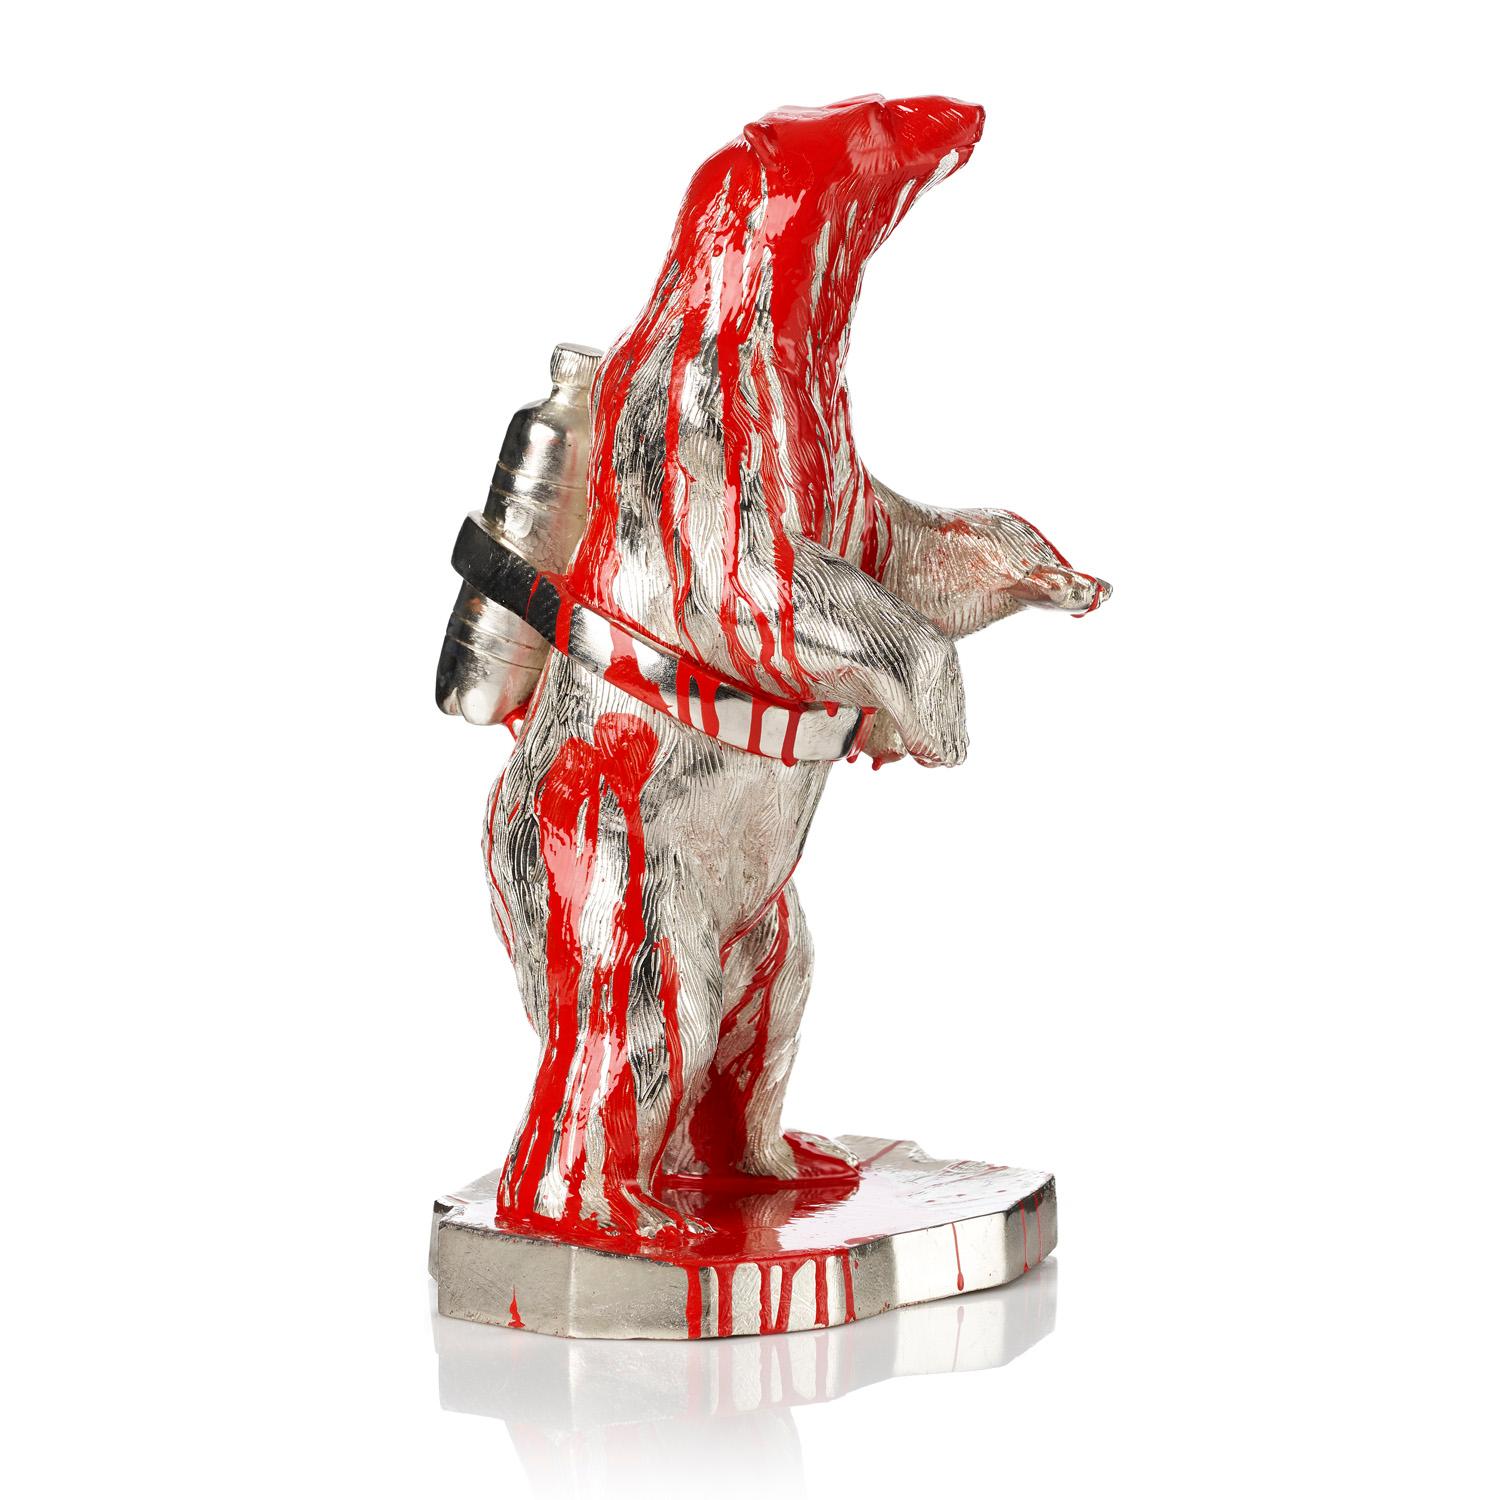 Cloned Polar Bear with pet bottle (red) - Pop Art Sculpture by William Sweetlove